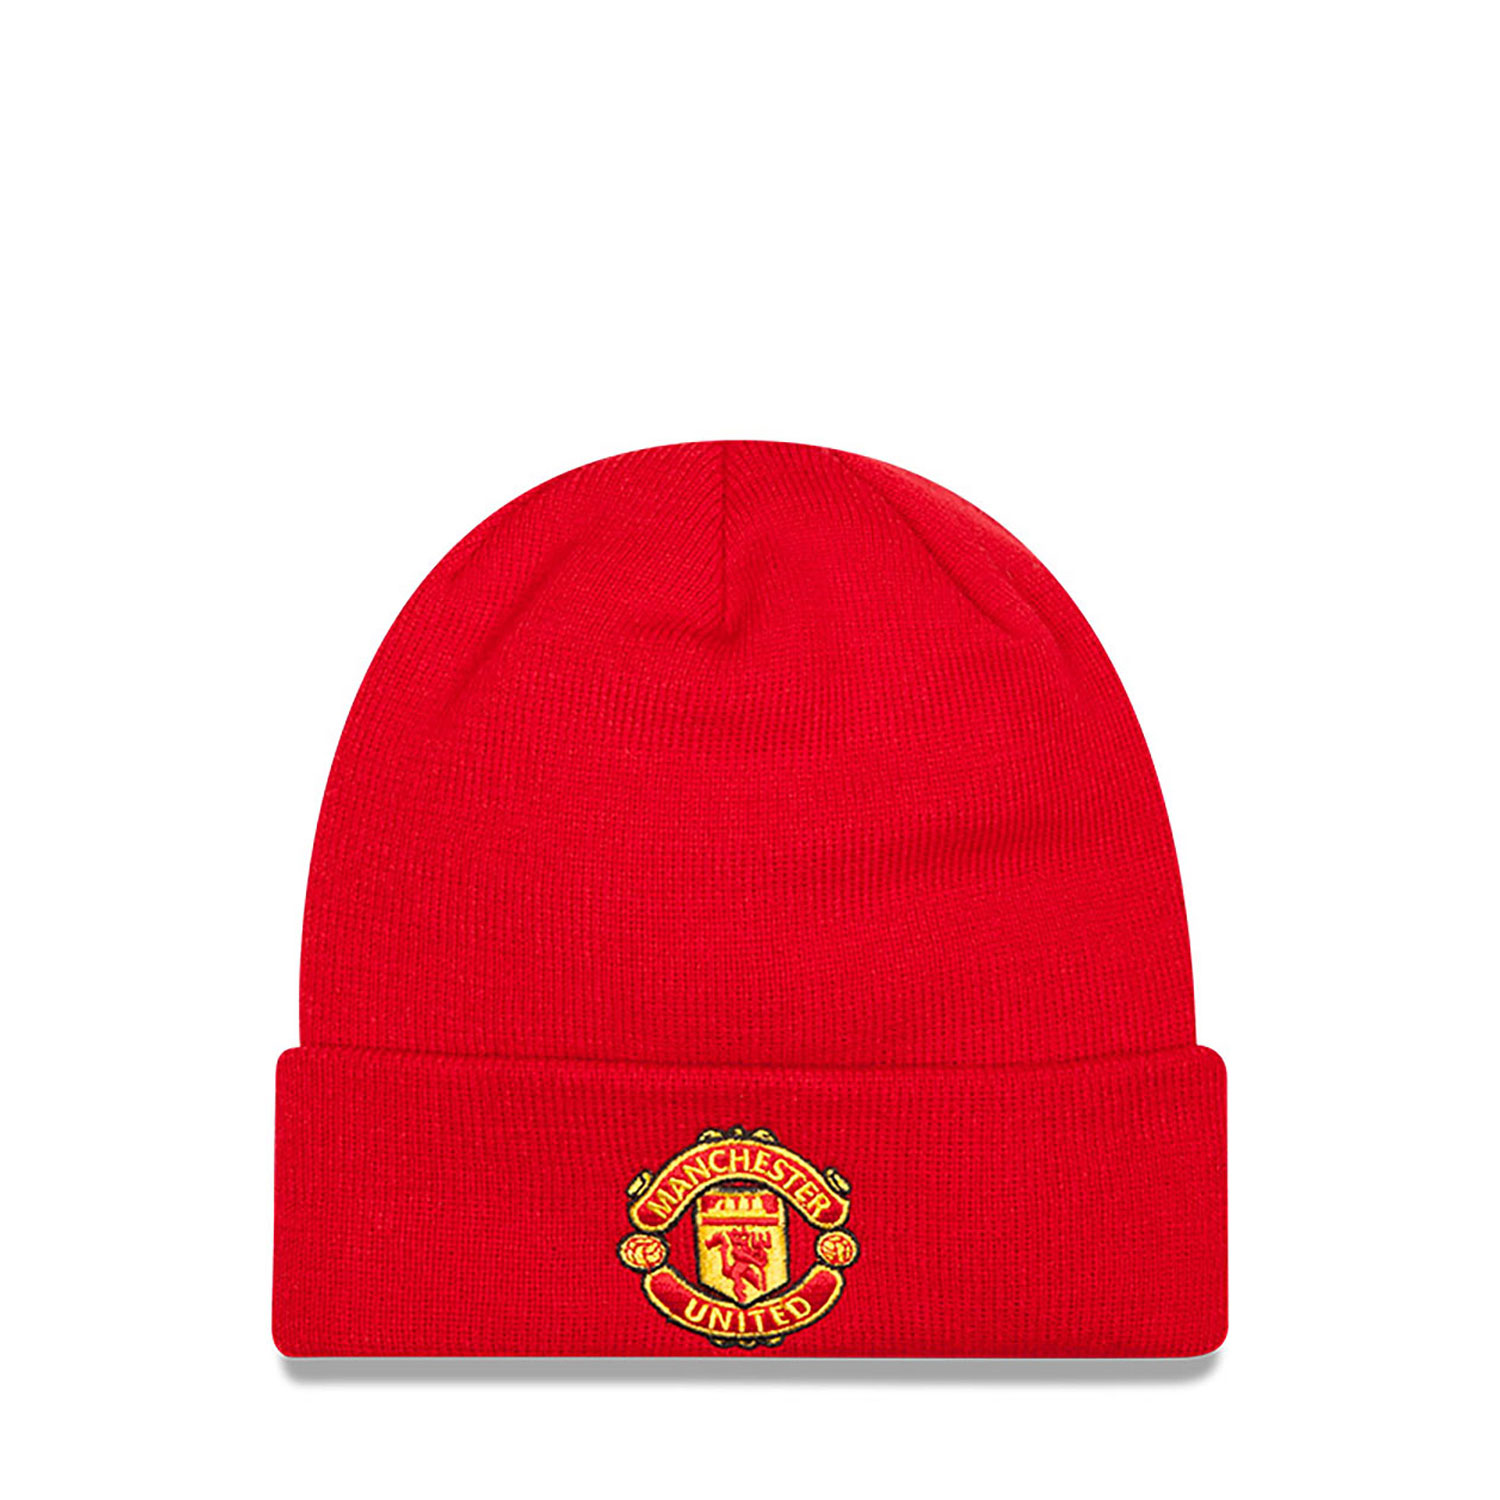 Manchester United FC Red Cuff Knit Beanie Hat